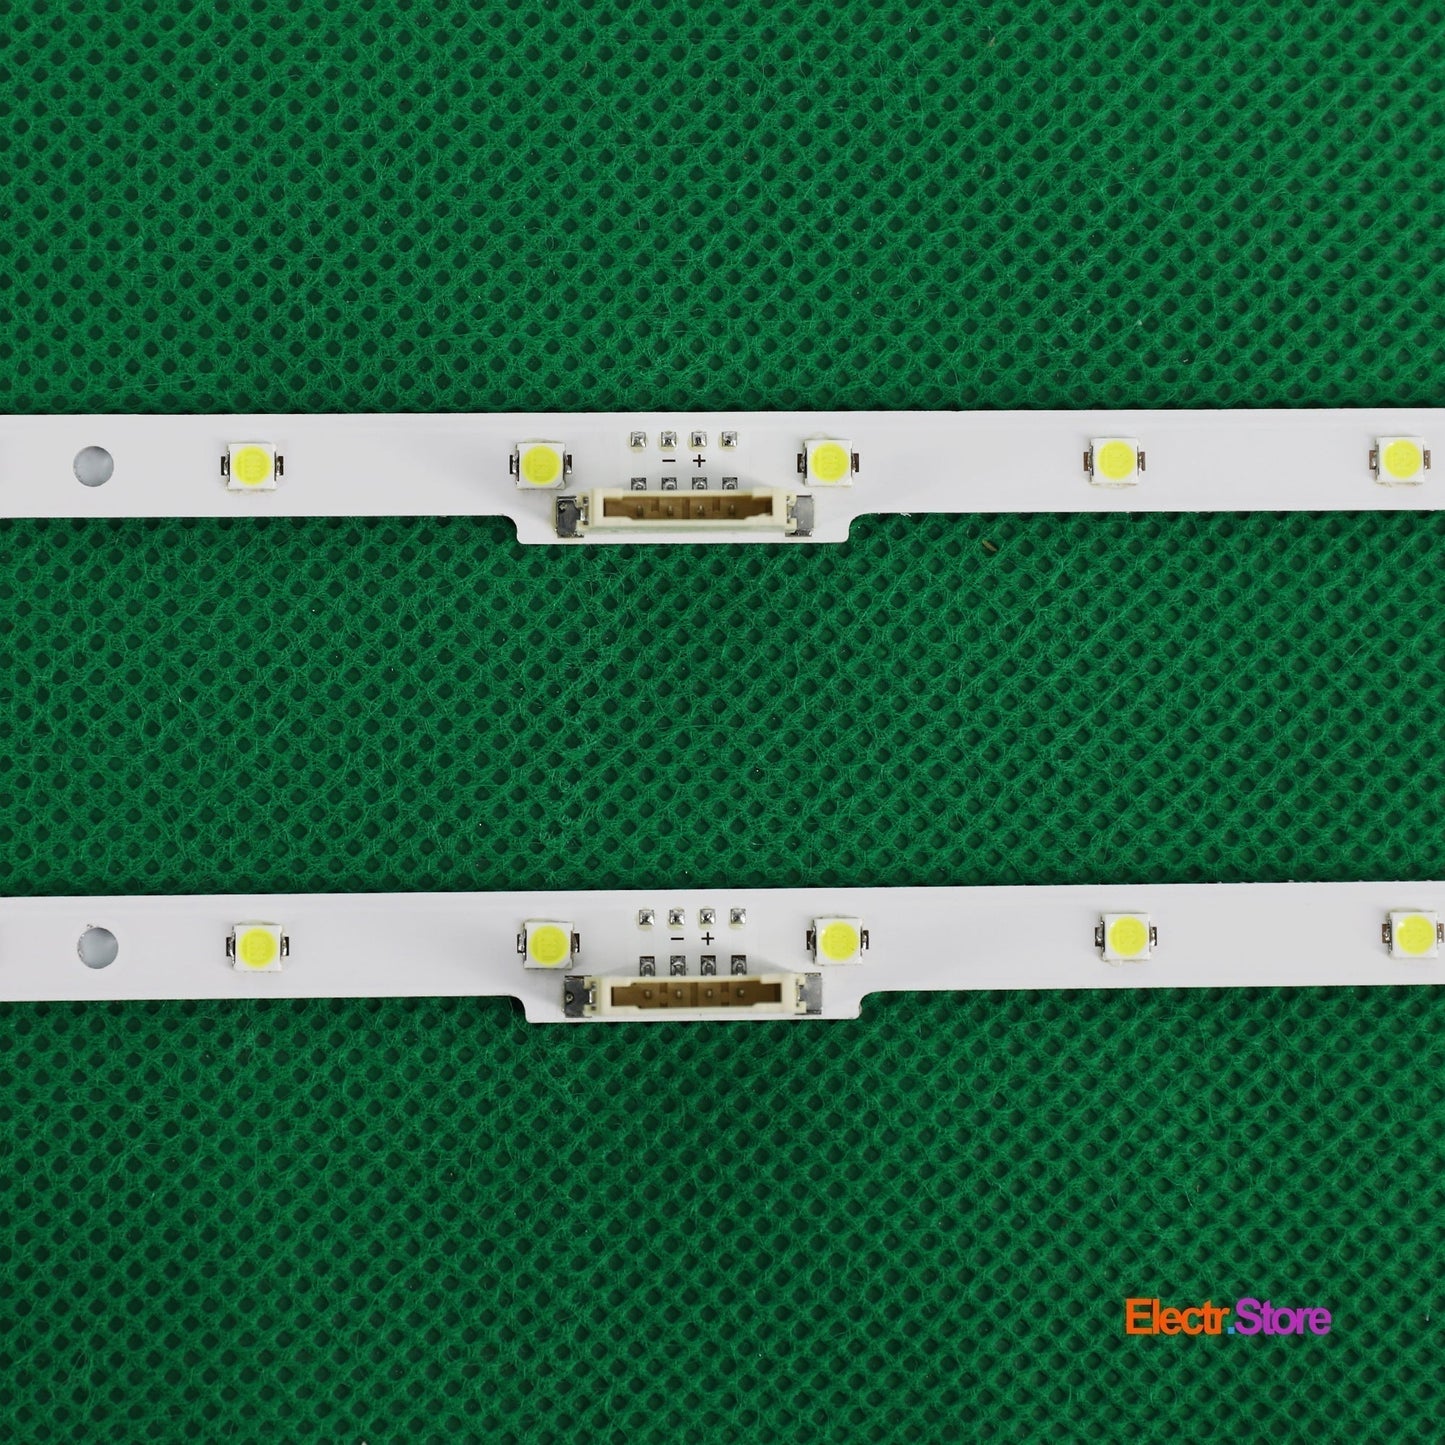 LED Backlight Strip Kits, AOT_40_NU7100F, LM41-00550A, LM41-00549A, BN96-45955A, 2X23LED (2 pcs/kit), for TV 40" SAMSUNG: UE40NU7195UXXC, UE40NU7199UXZG, UN40NU6070FXZA, UN40NU7100FXZAFA01 40" LED Backlights LM41-00550A Samsung Electr.Store